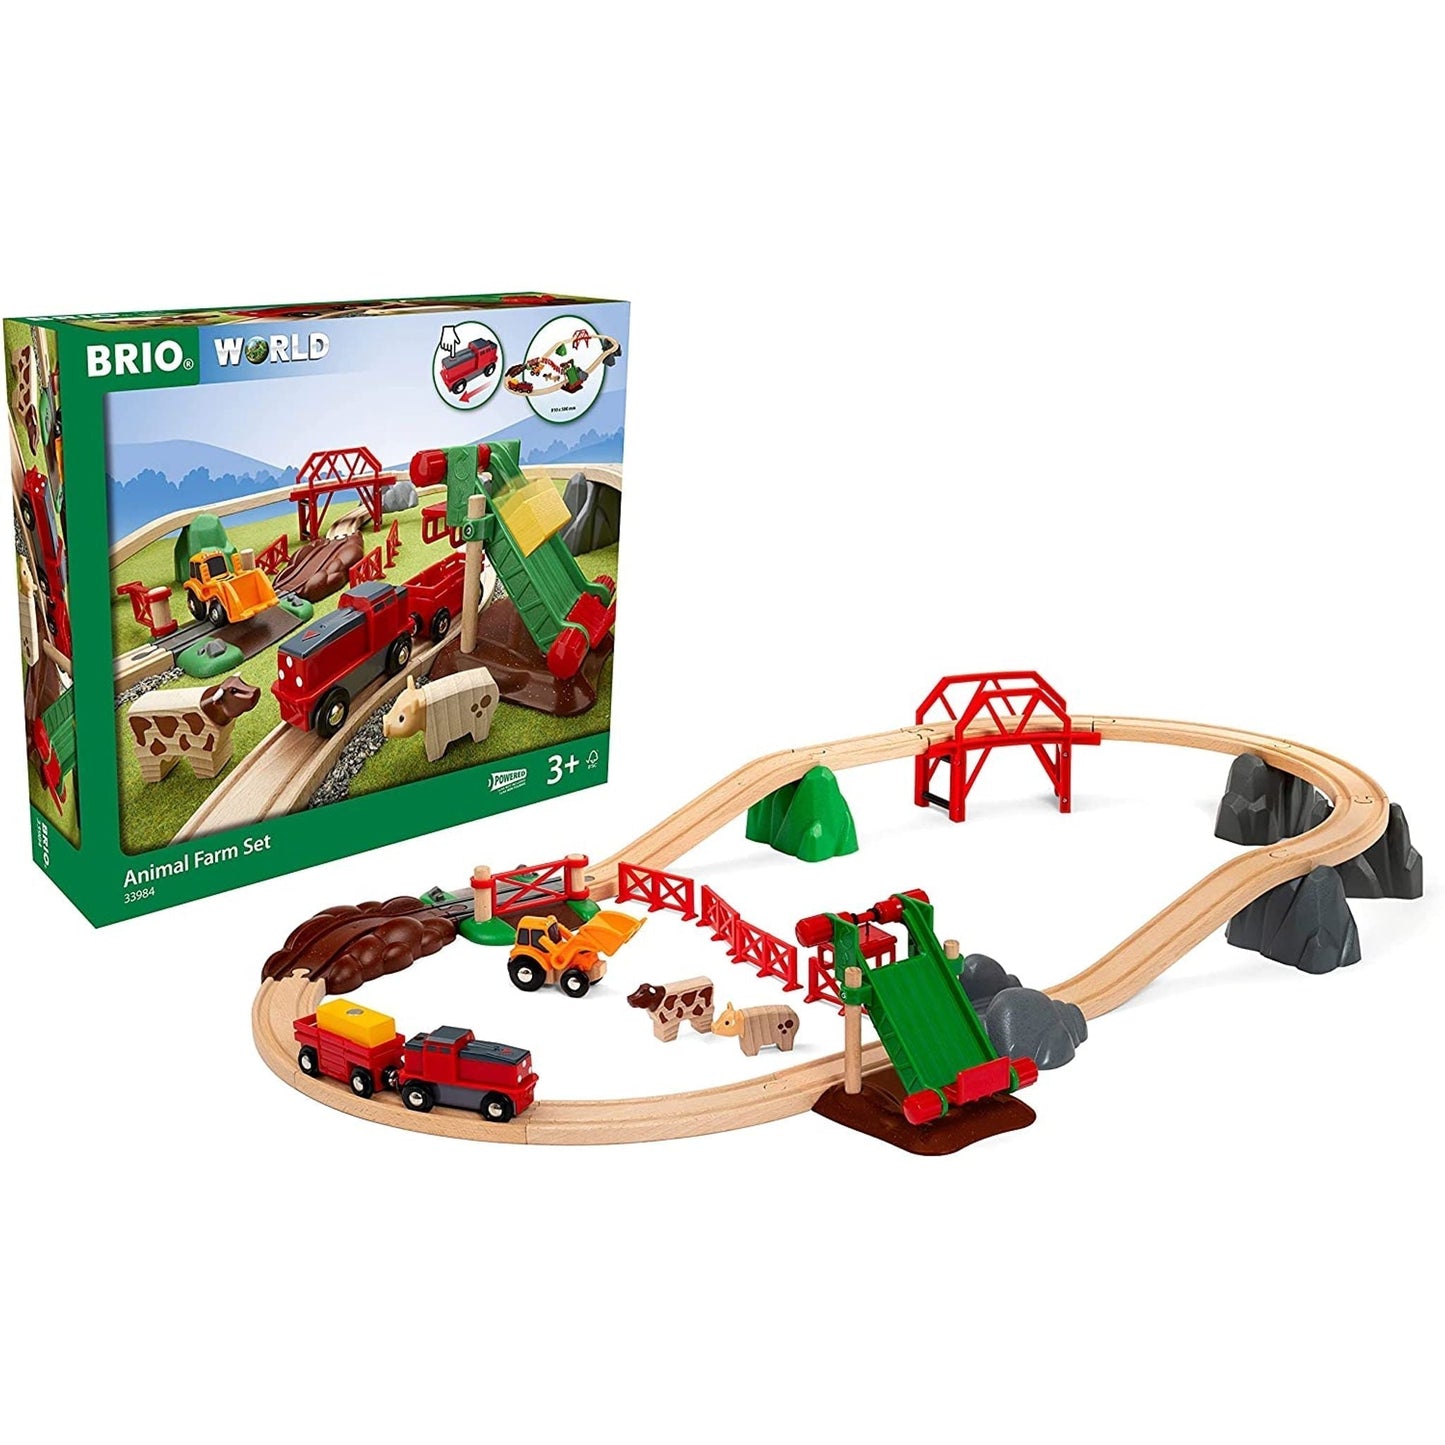 BRIO Set - Animal Farm Set 30 pieces - Toybox Tales